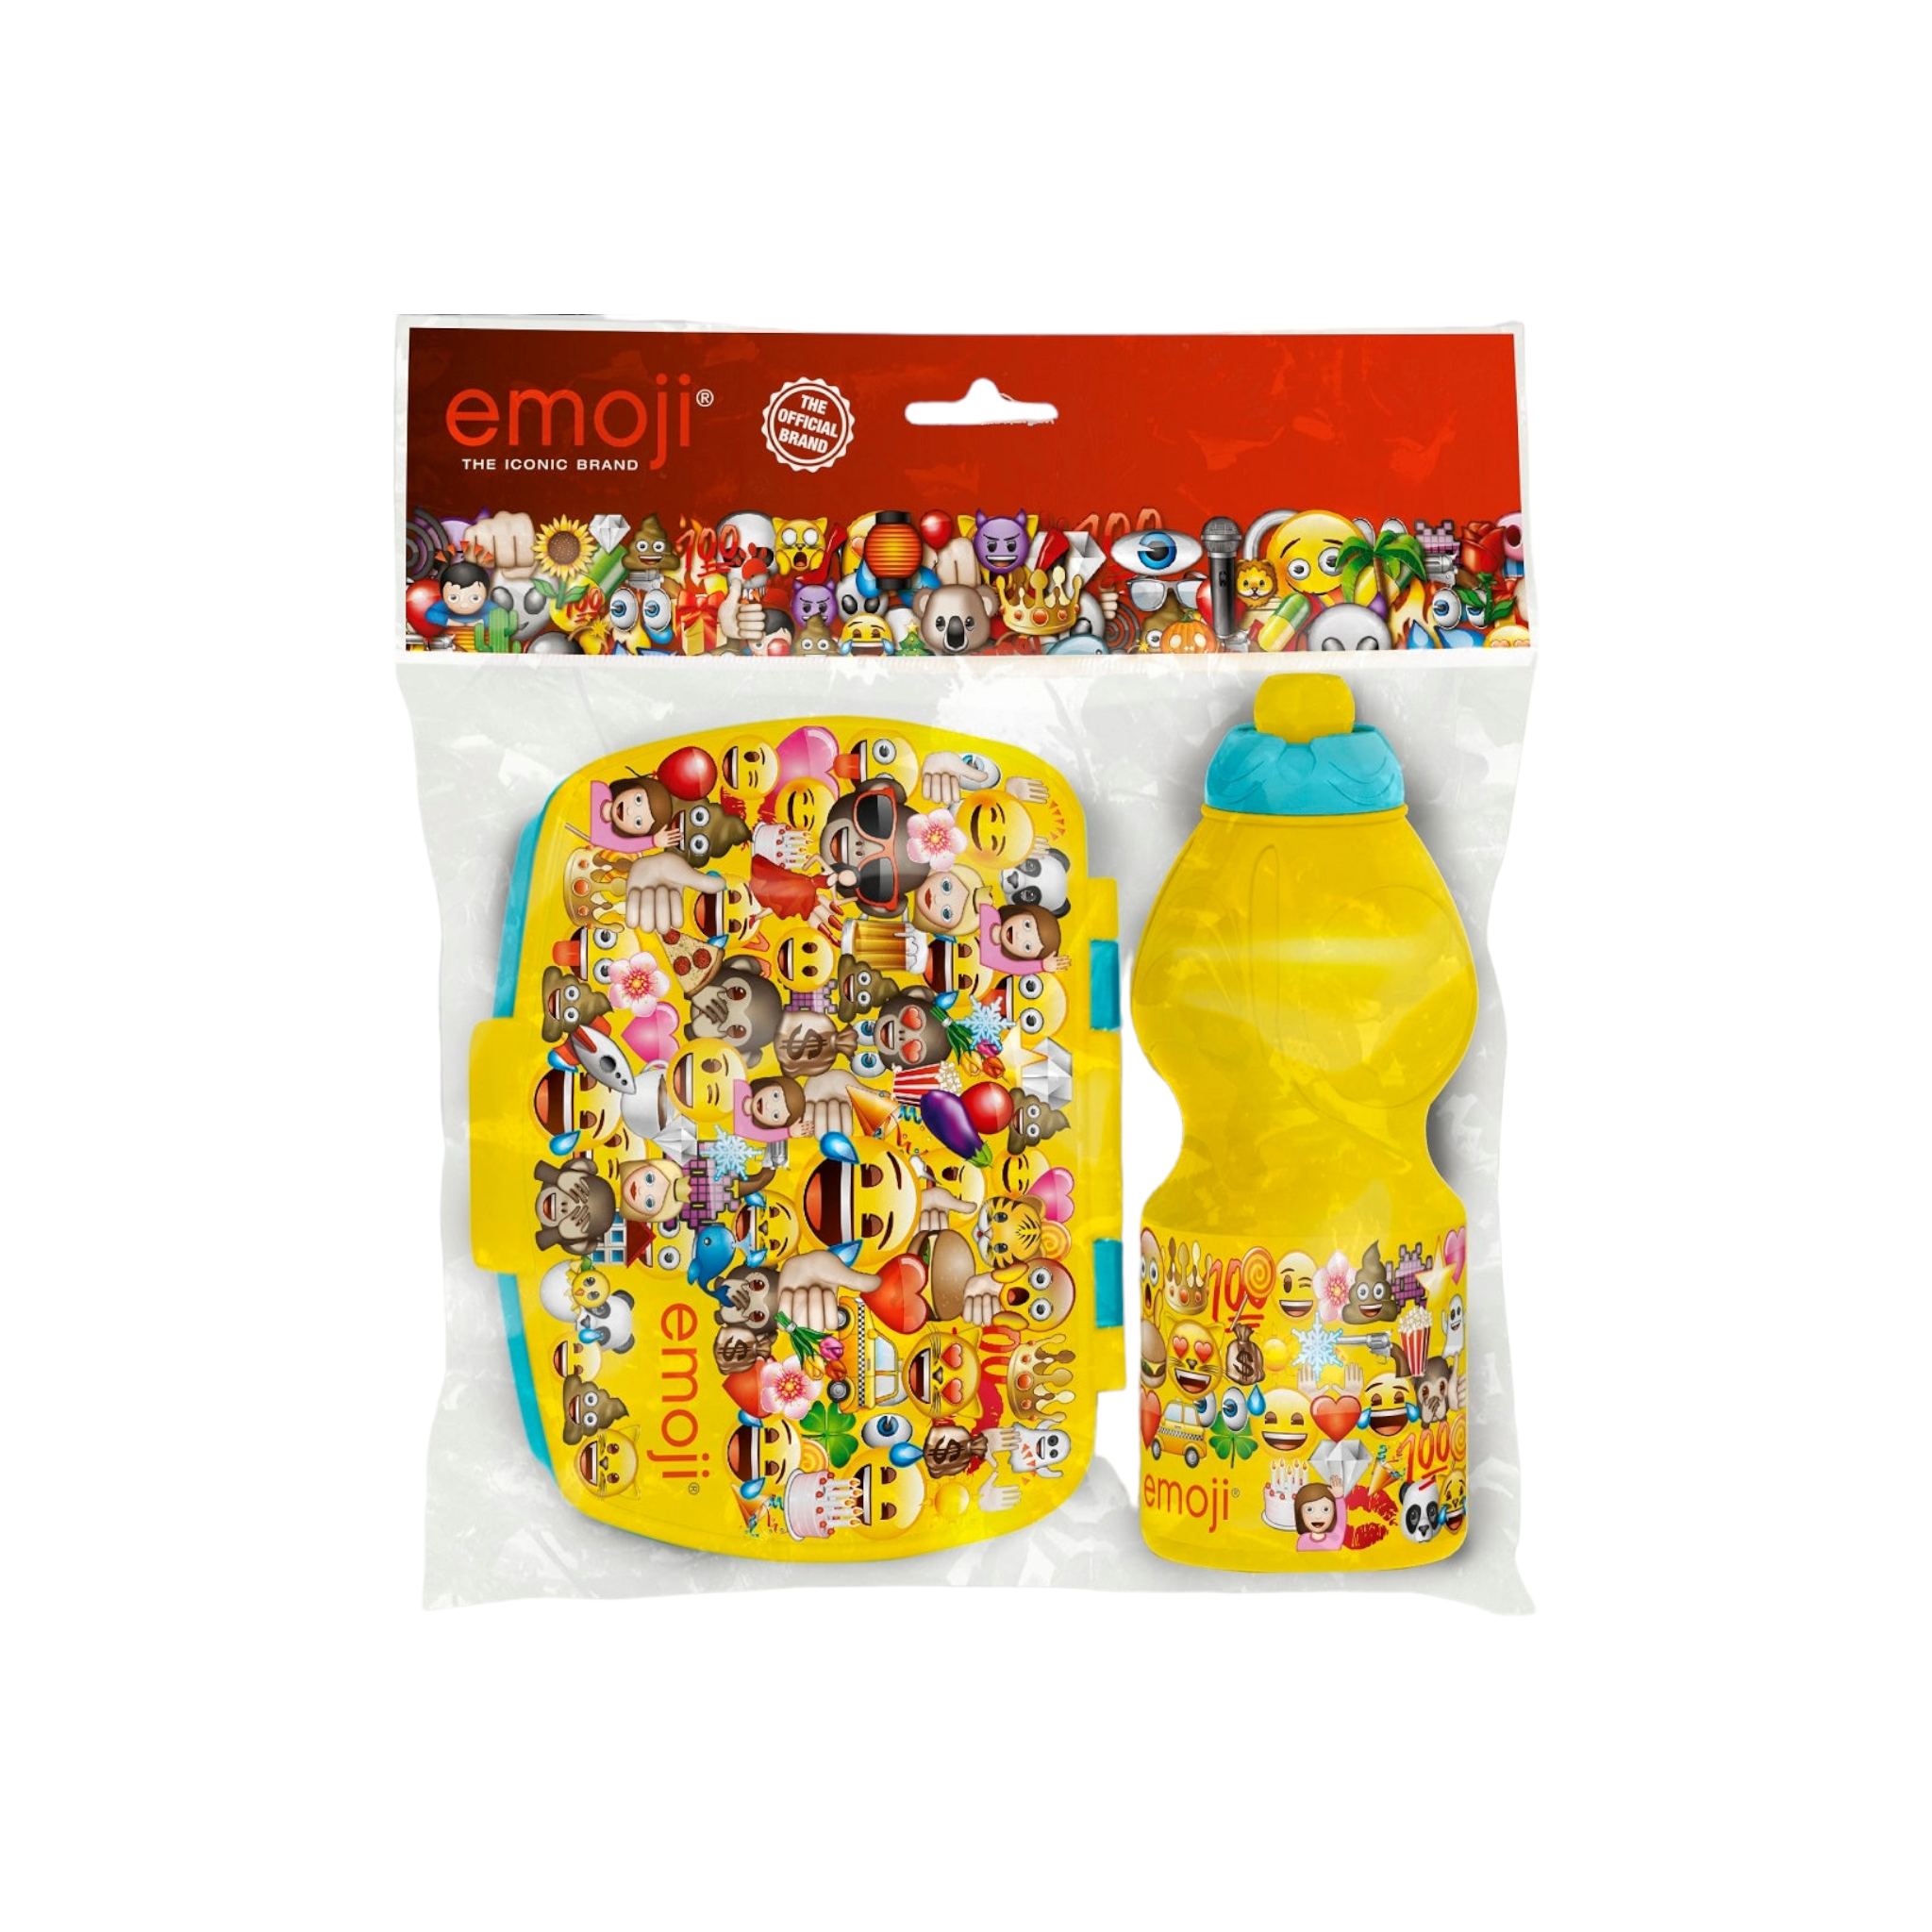 Disney Emoji Sandwich Box and Bottle 2pc 20619